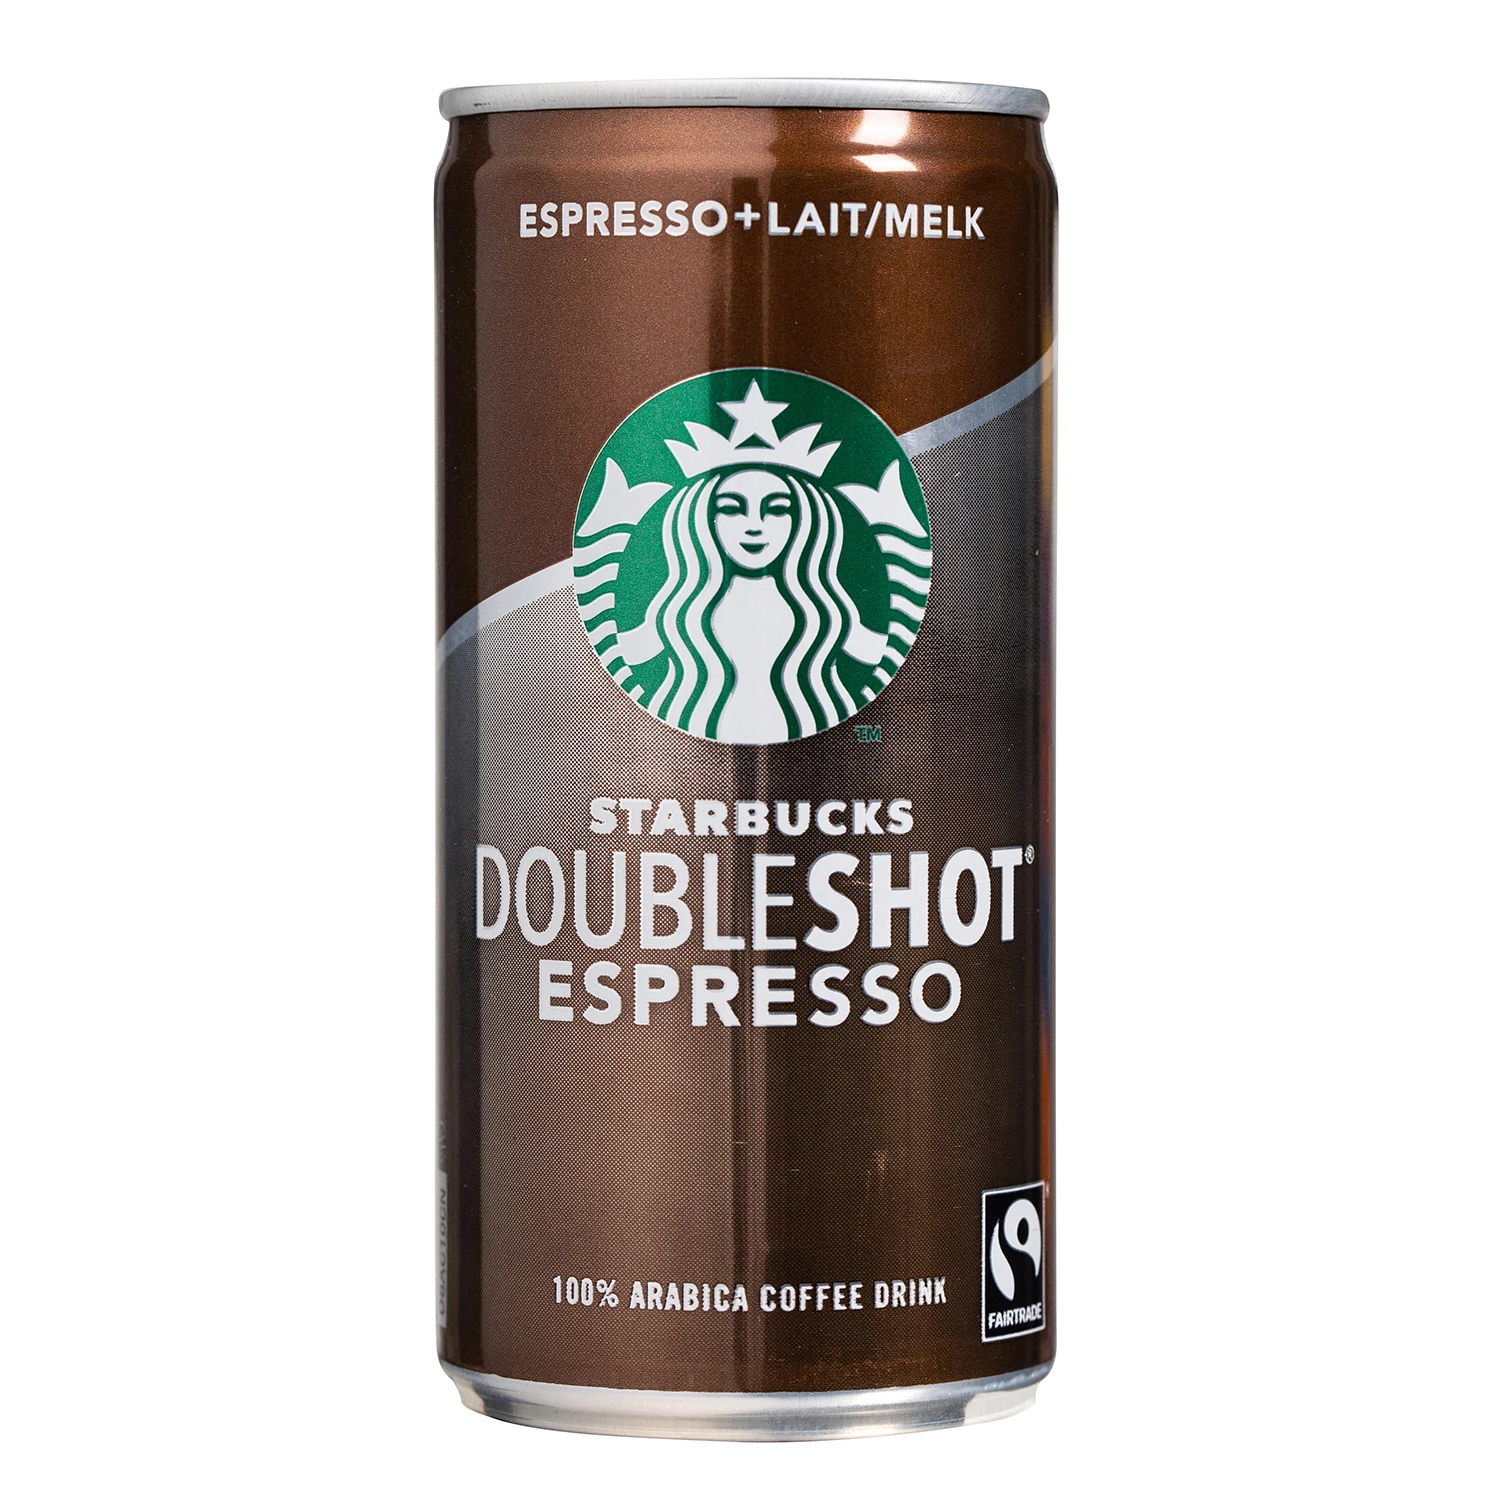 Starbucks Doubleshot Espresso Milk 2